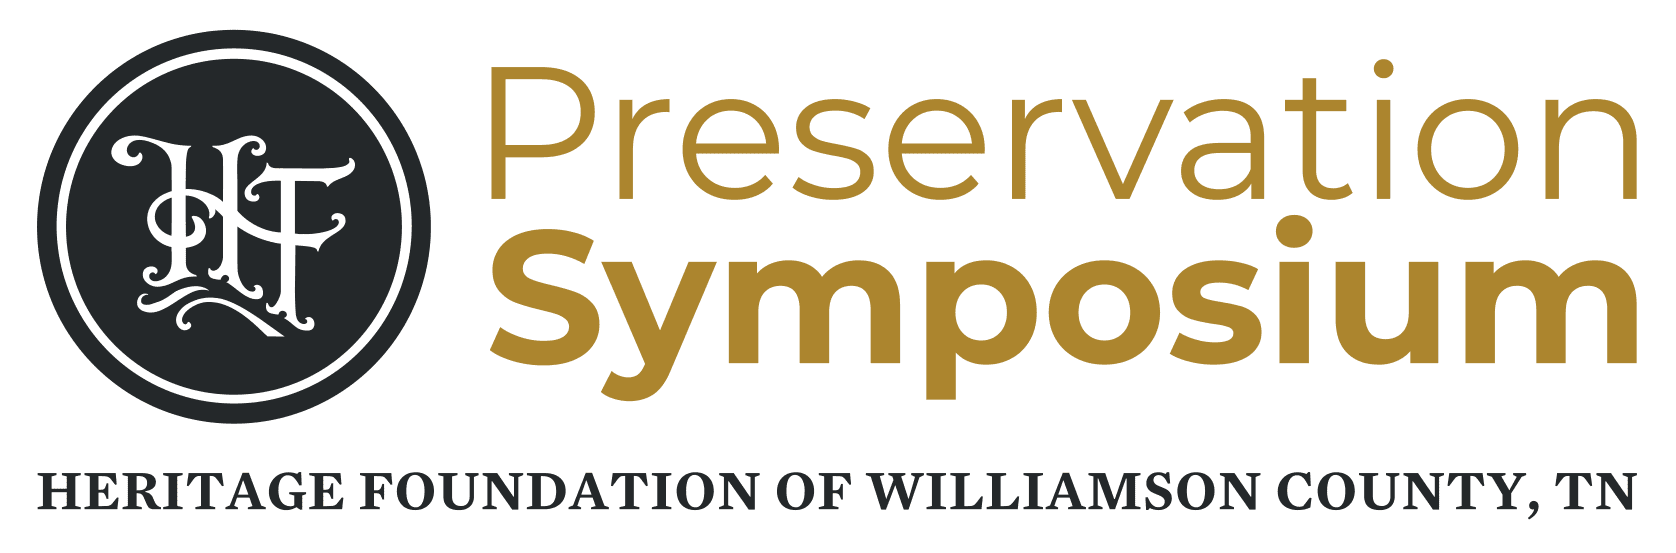 Heritage Foundation of Williamson County, TN Preservation Symposium logo